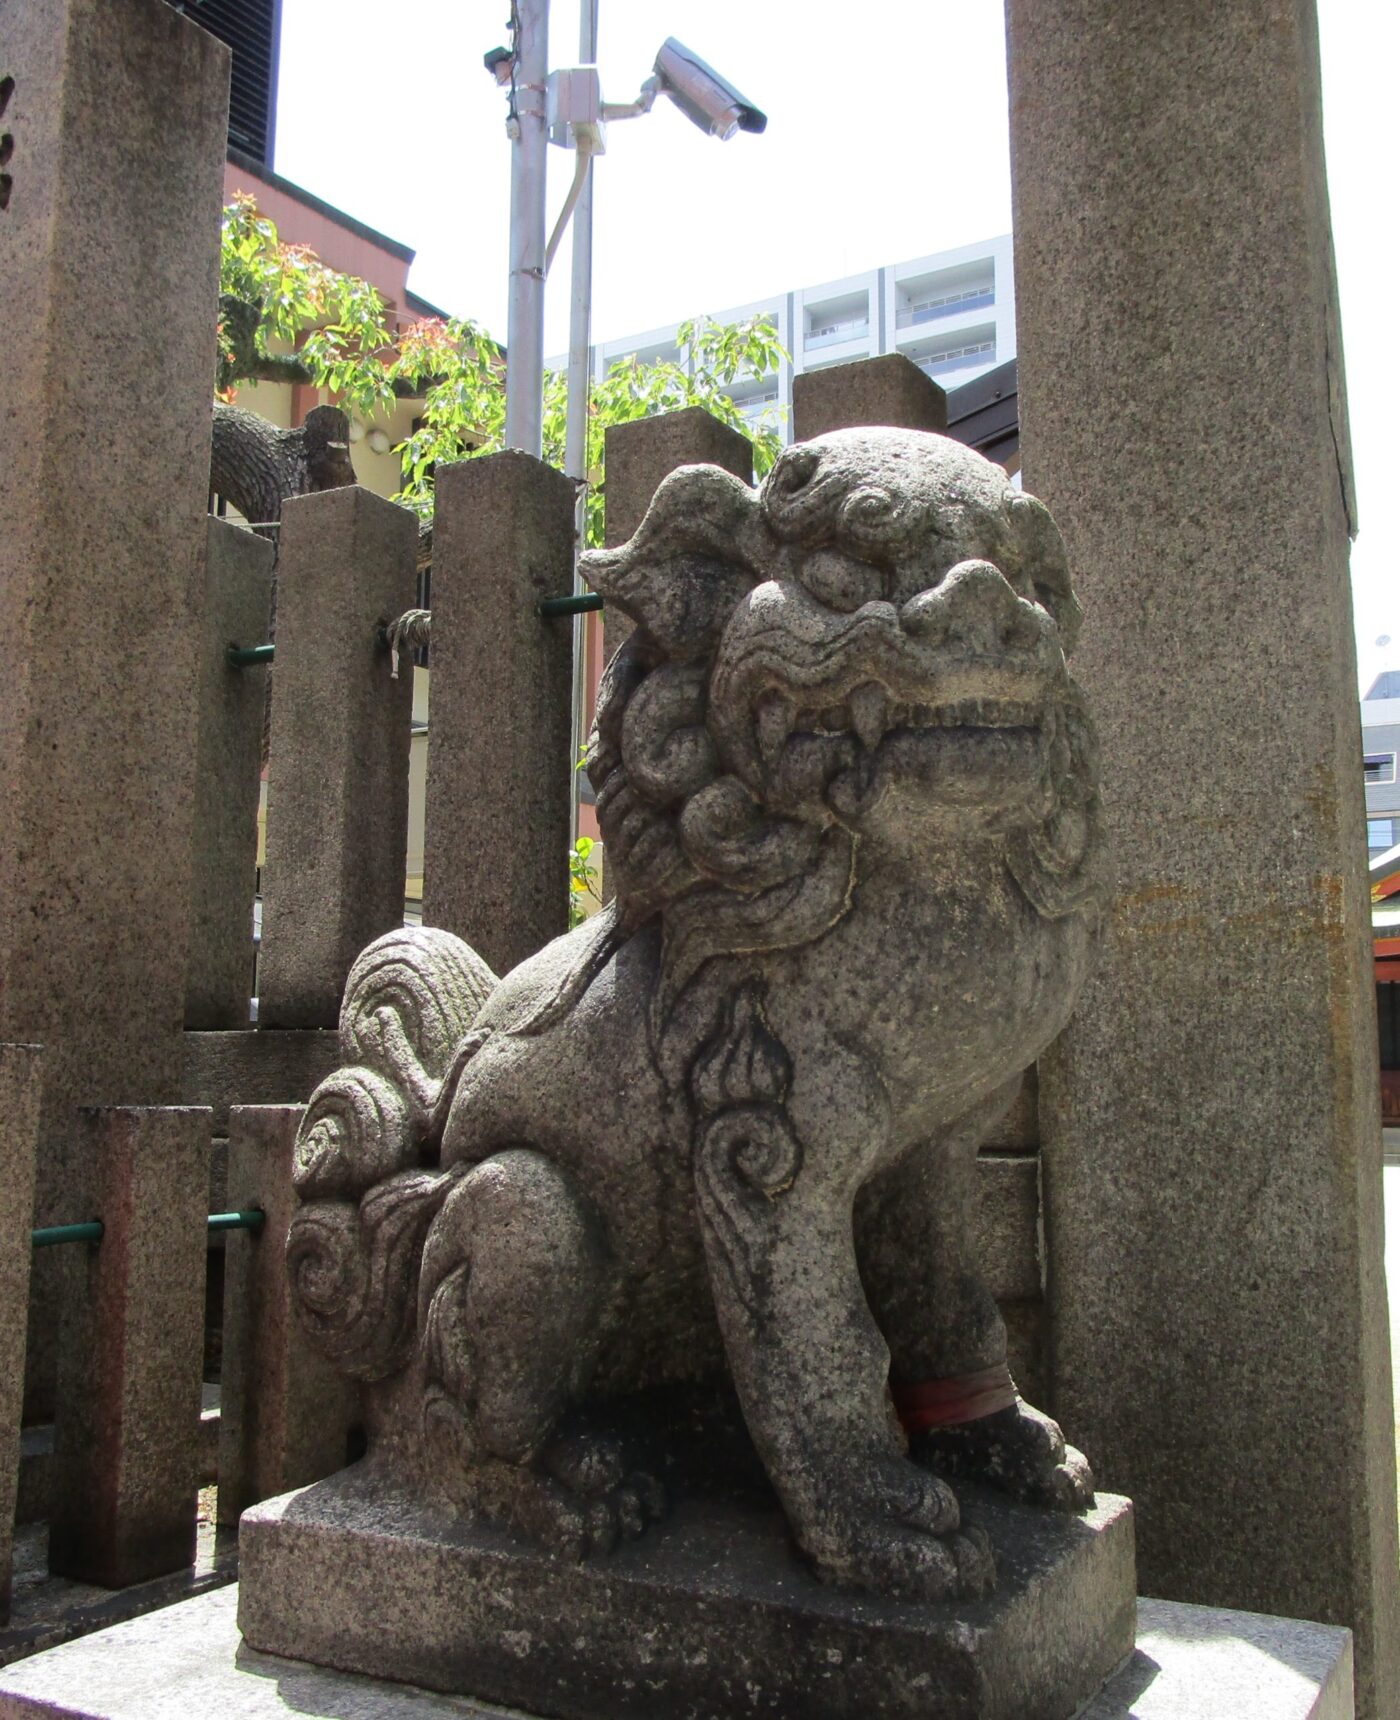 堀川戎神社の写真